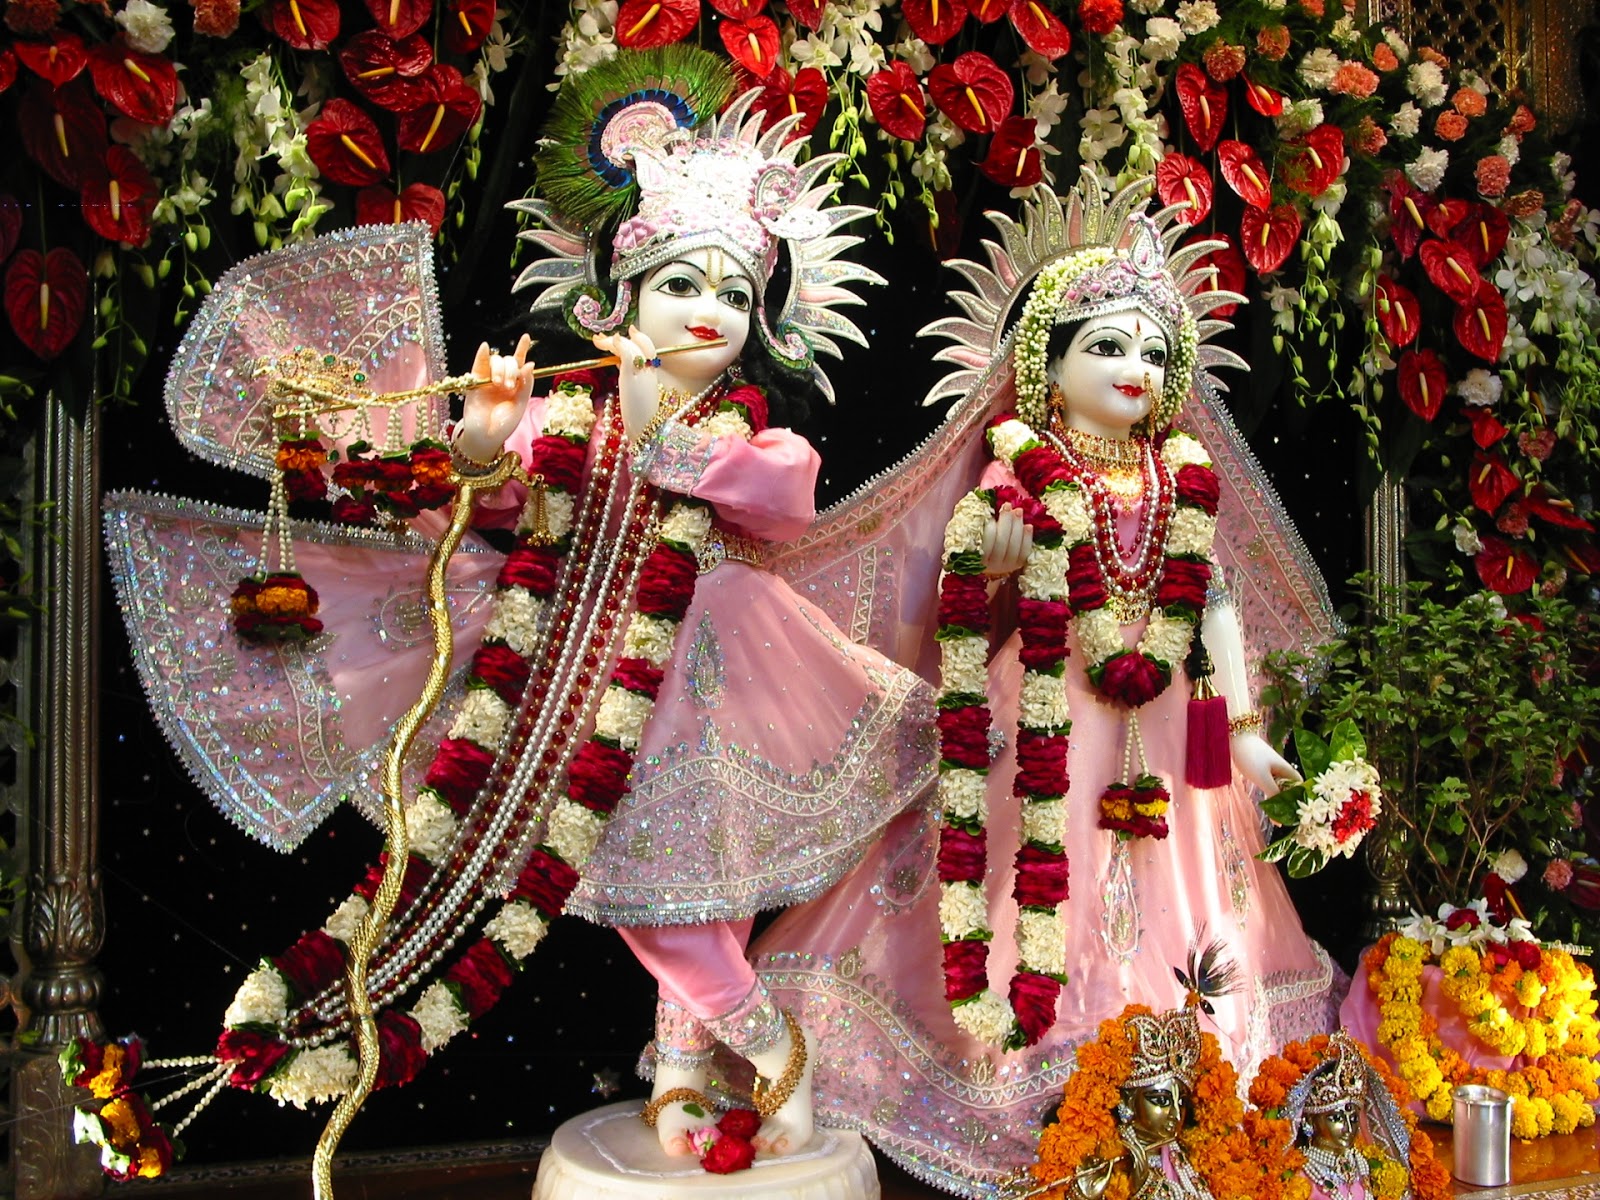 Best HD Photos of Radha Krishna Blessings   Festival Chaska